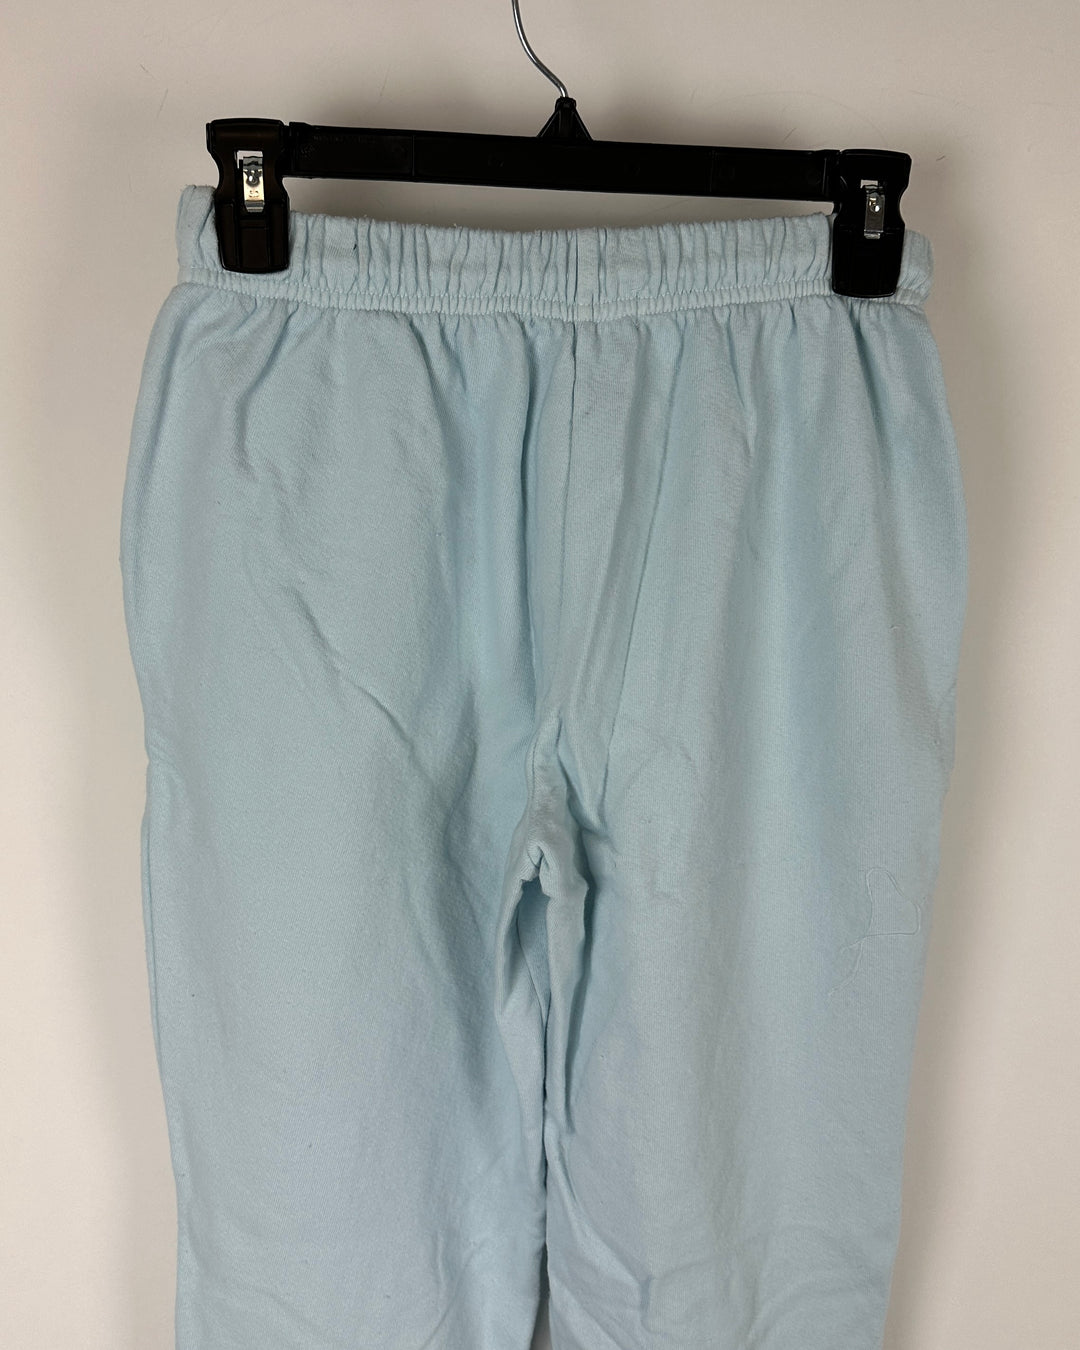 Light Blue Sweatpants - Size 0/2 and 2/4